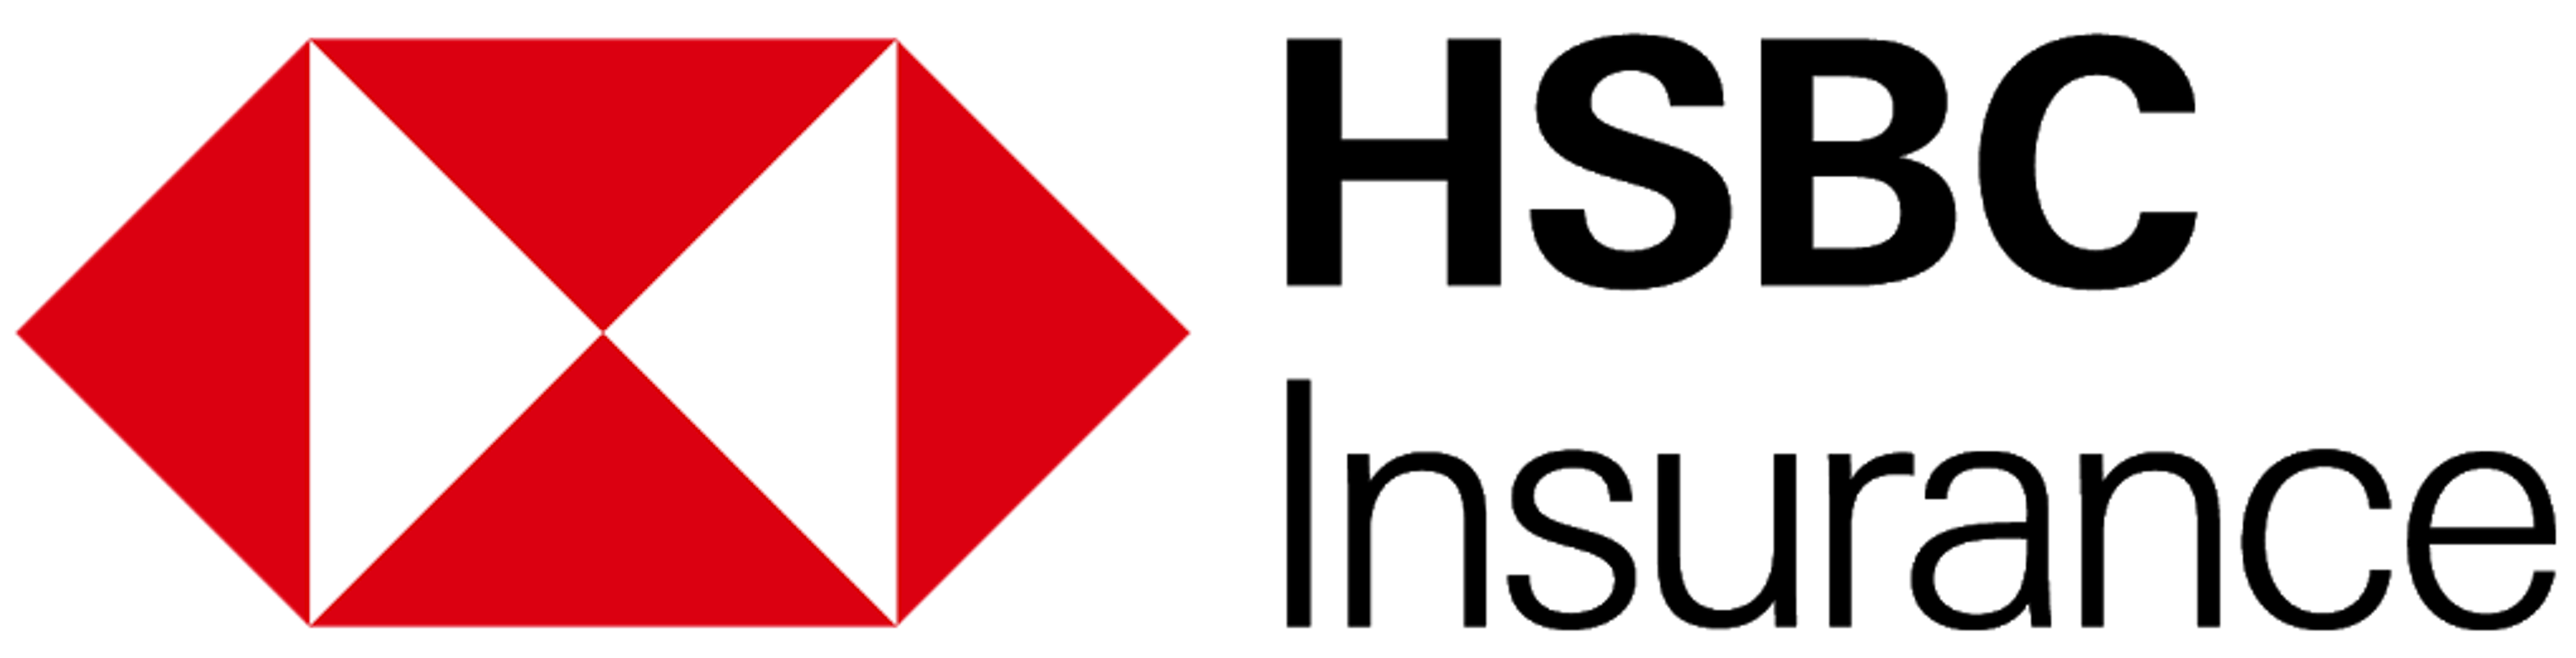 hsbc.co.uk travel insurance